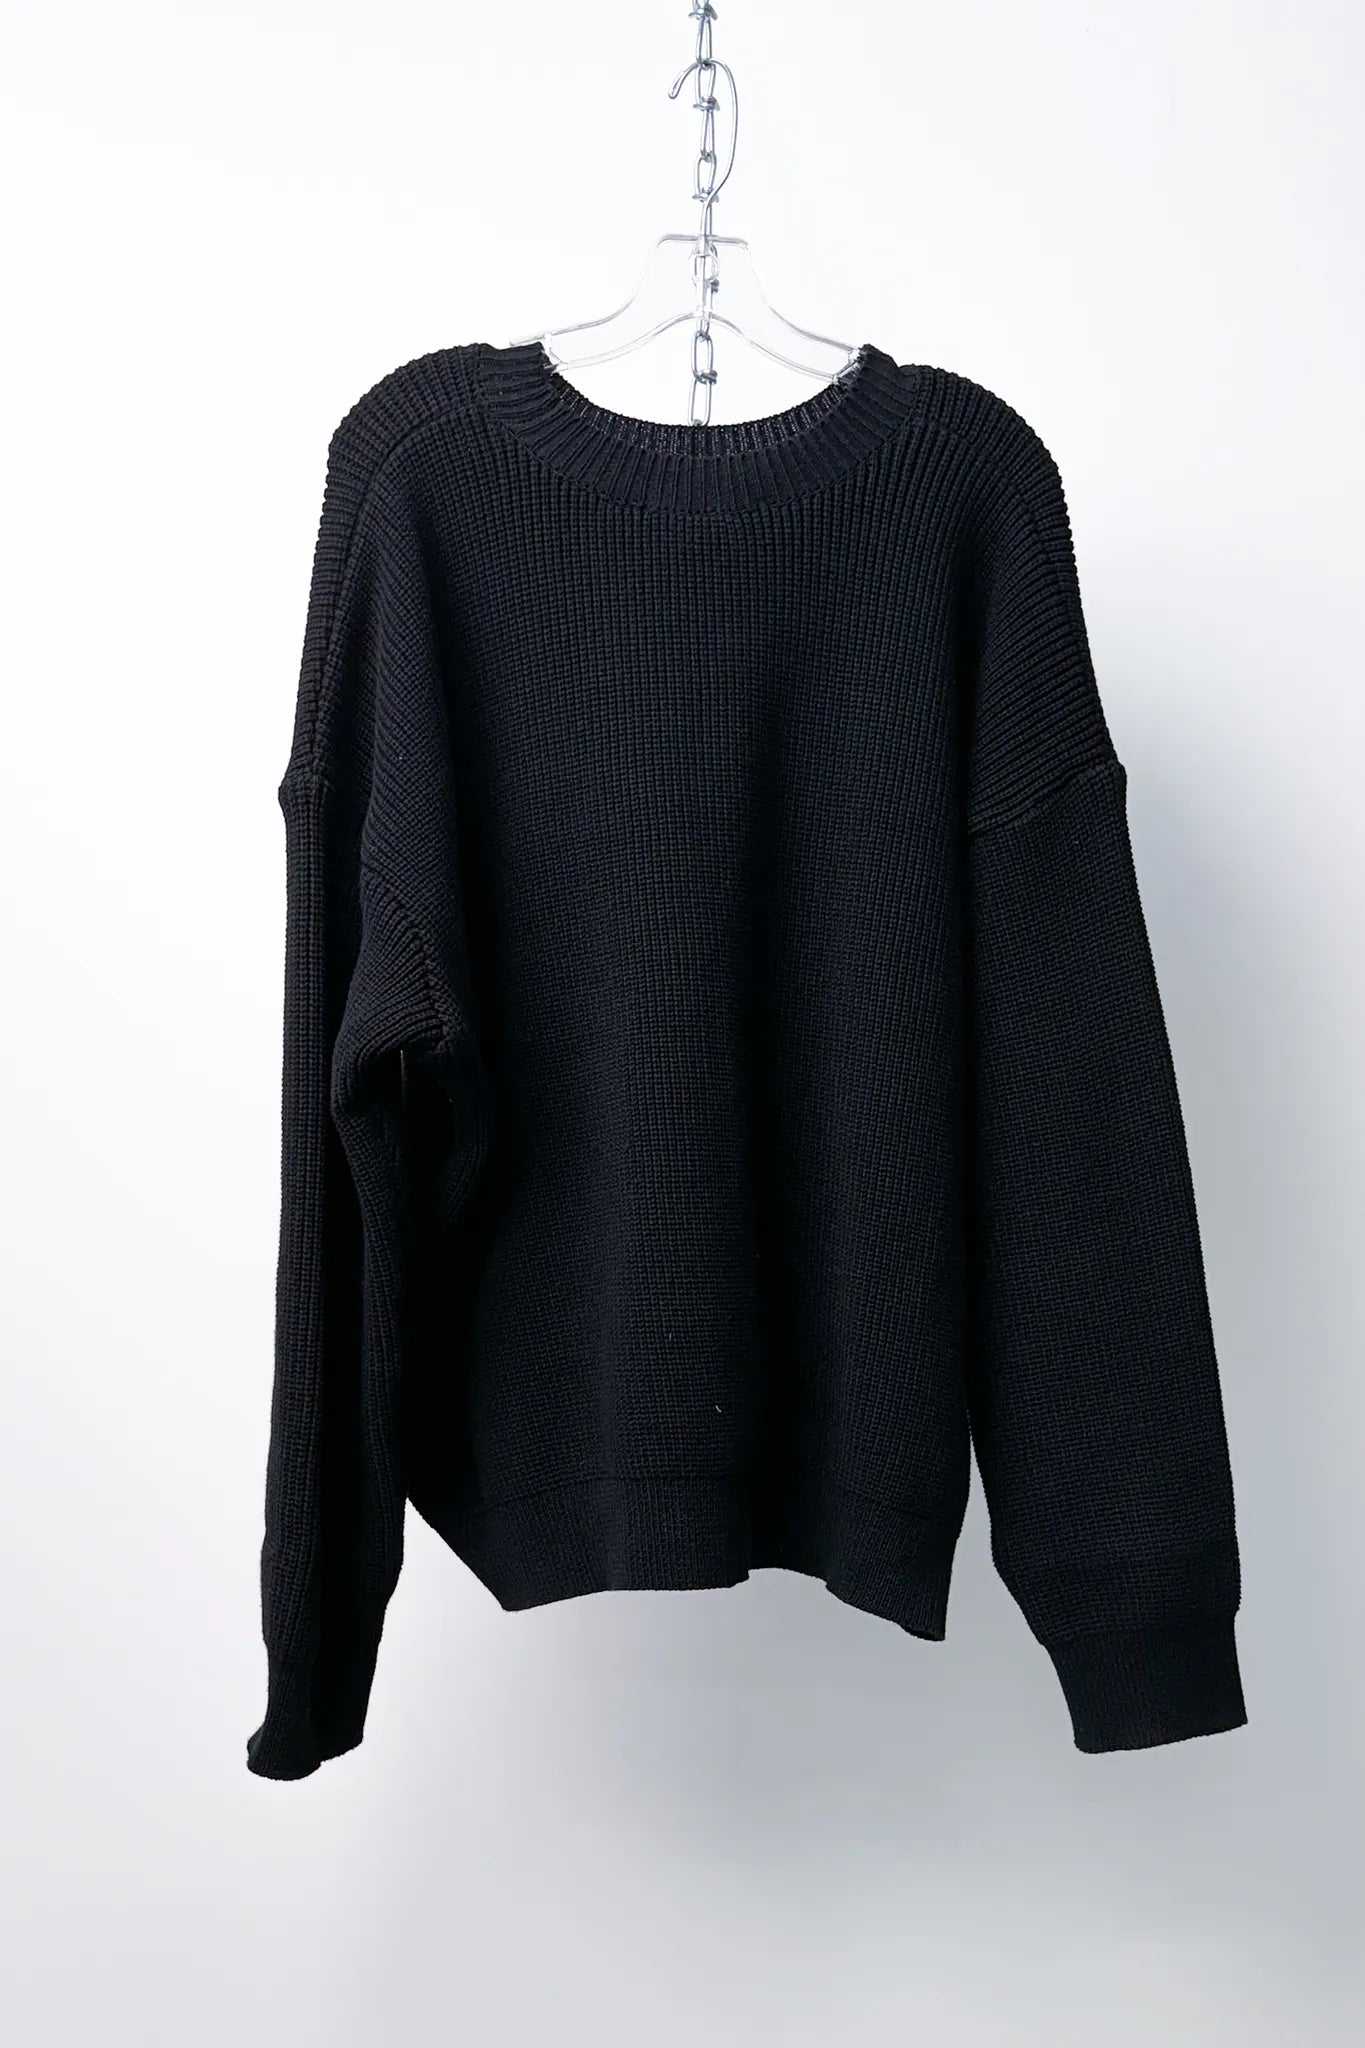 Black oversized knit sweater